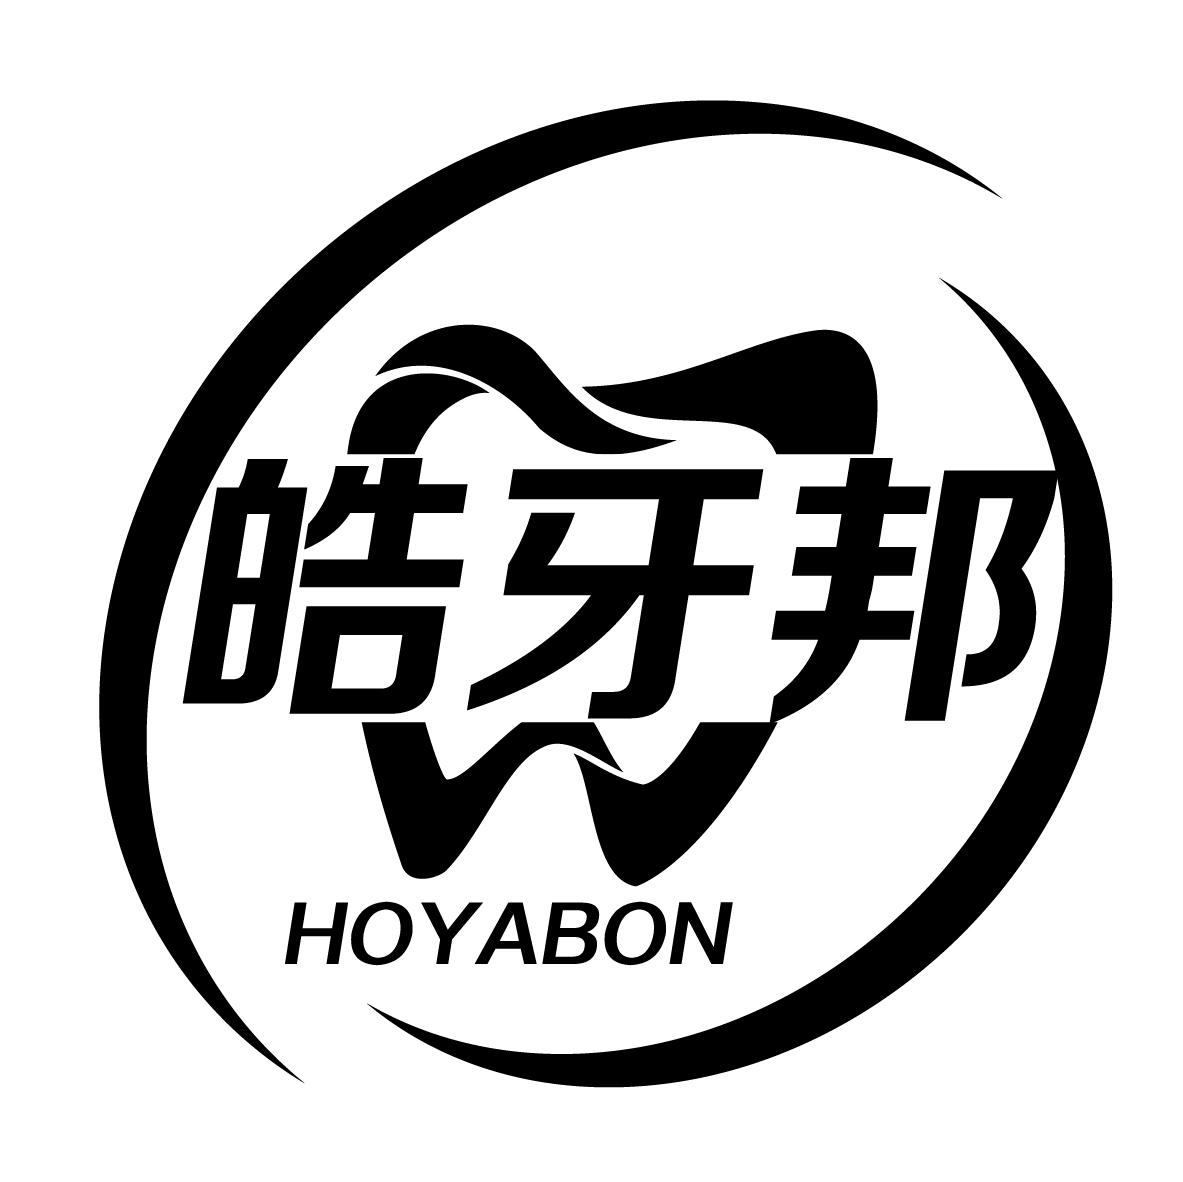  HOYABON